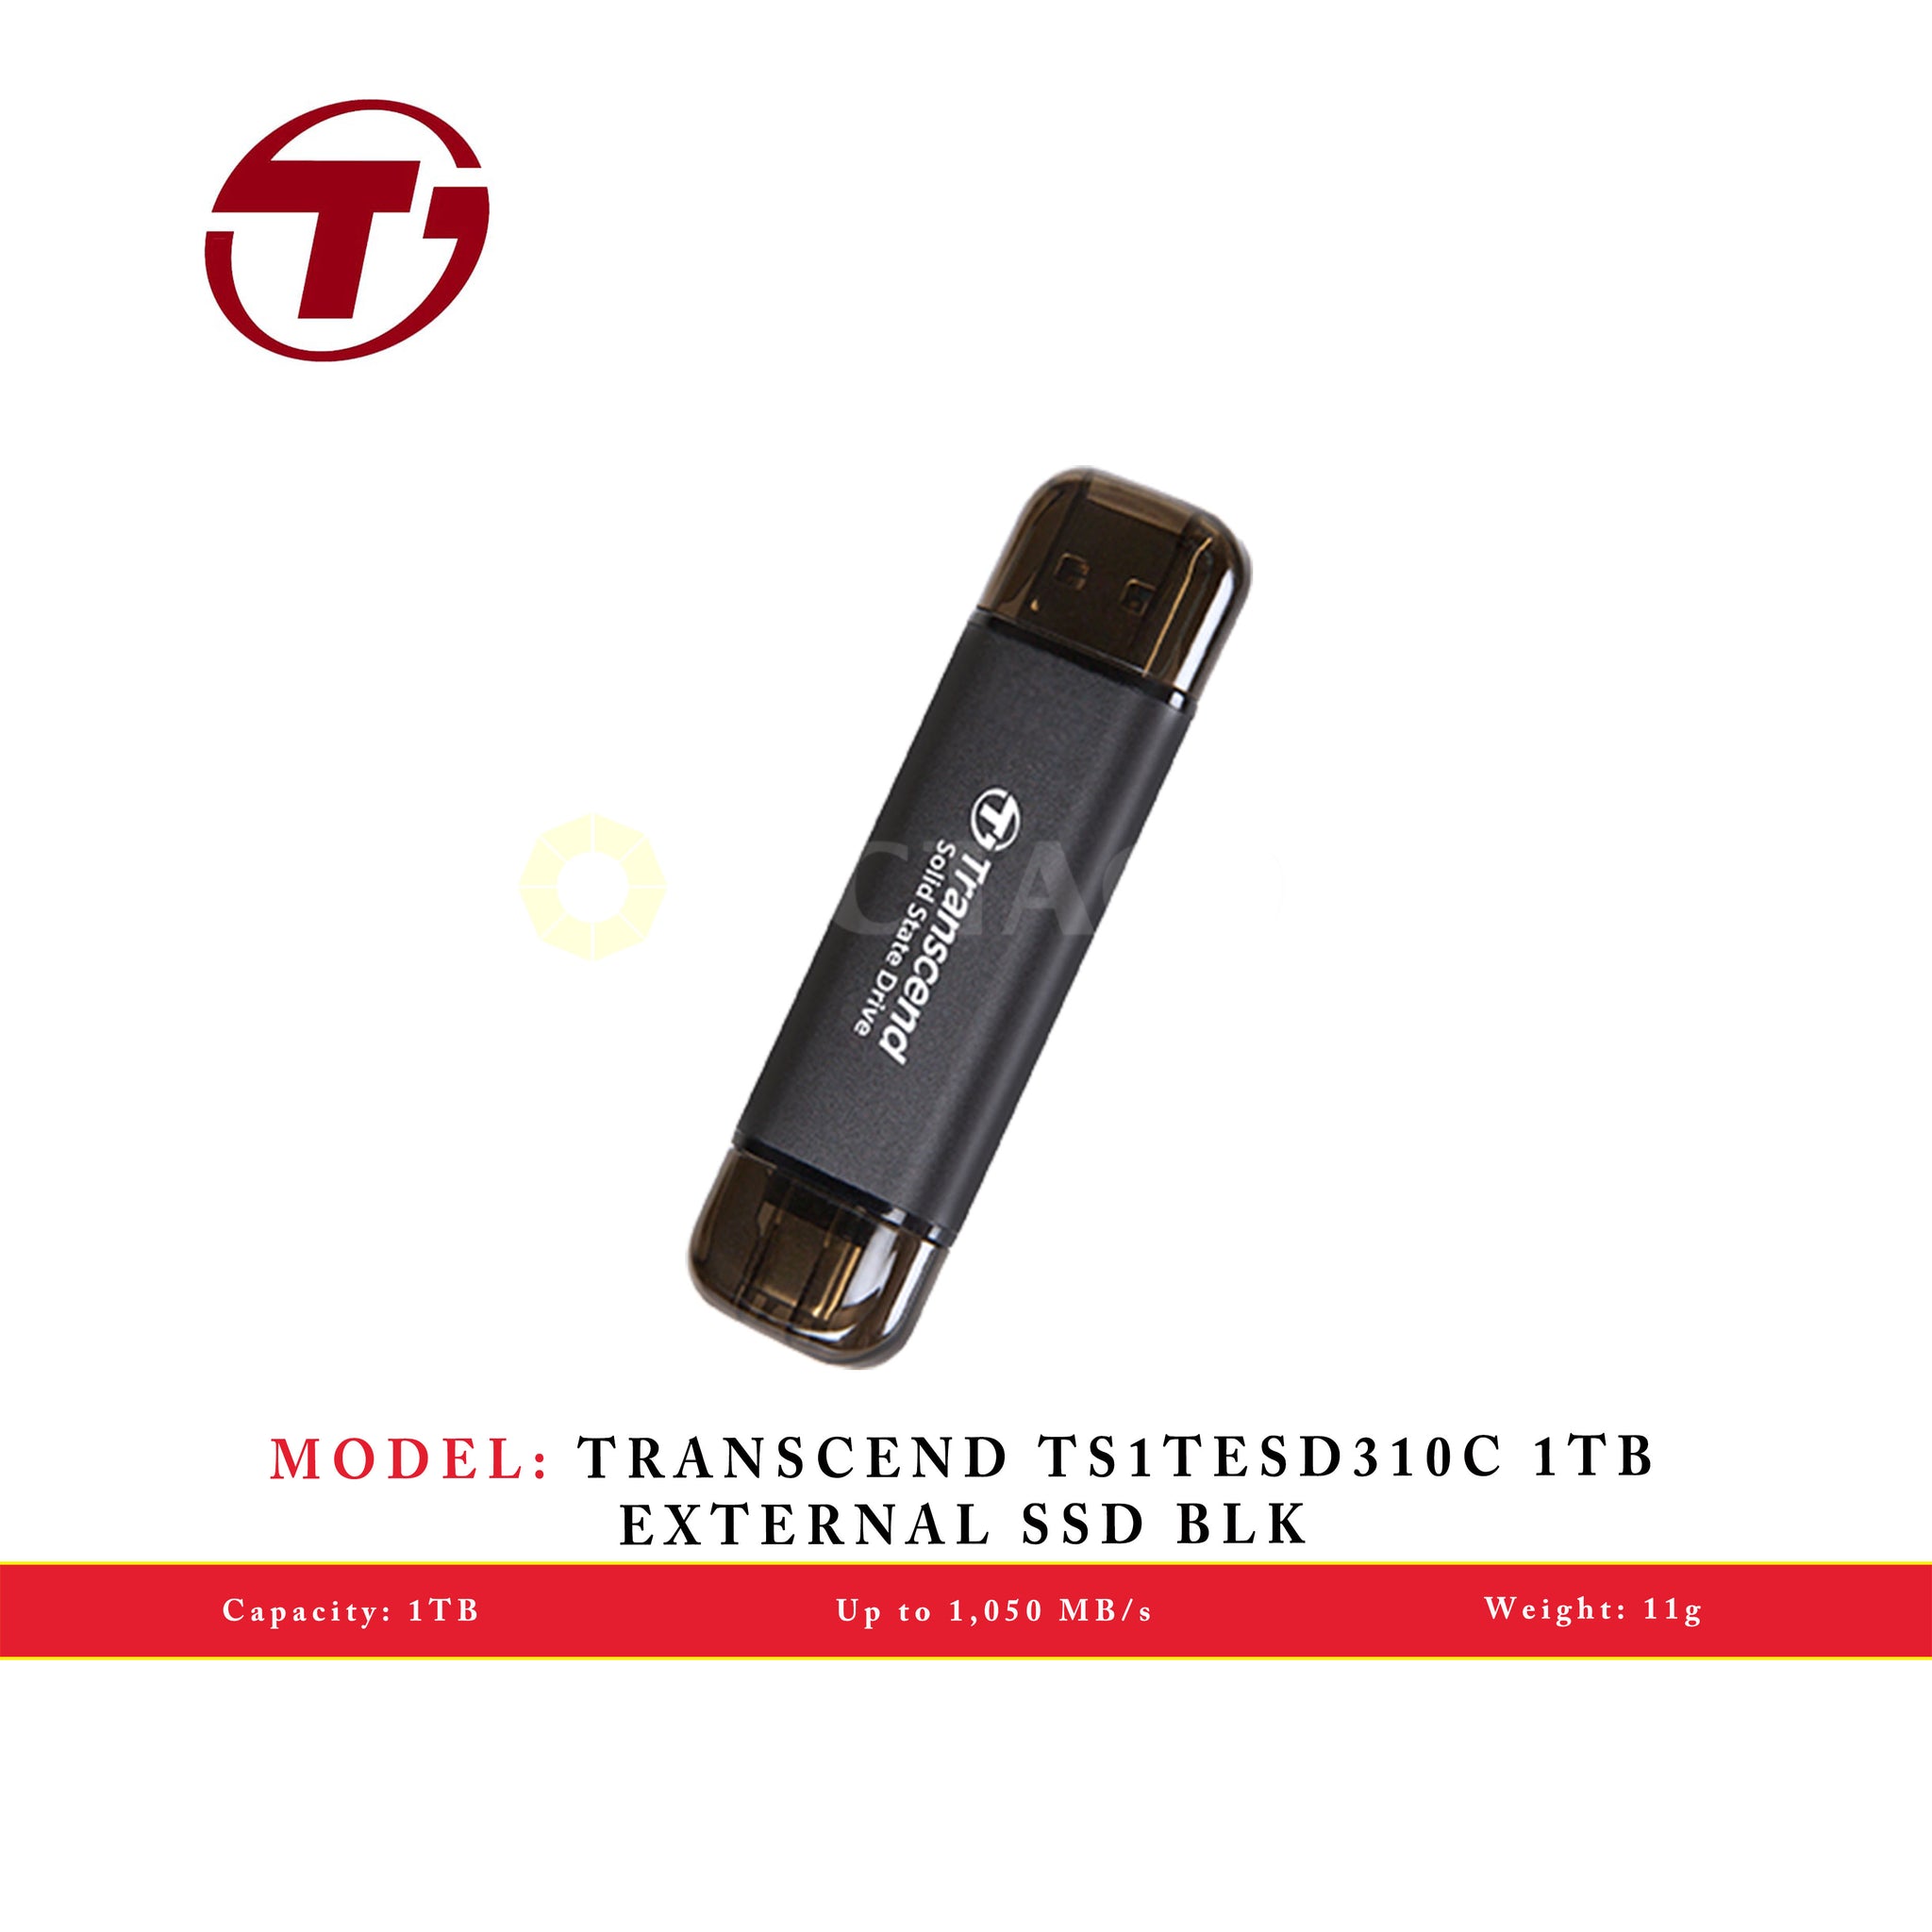 TRANSCEND TS1TESD310C 1TB EXTERNAL SSD BLK